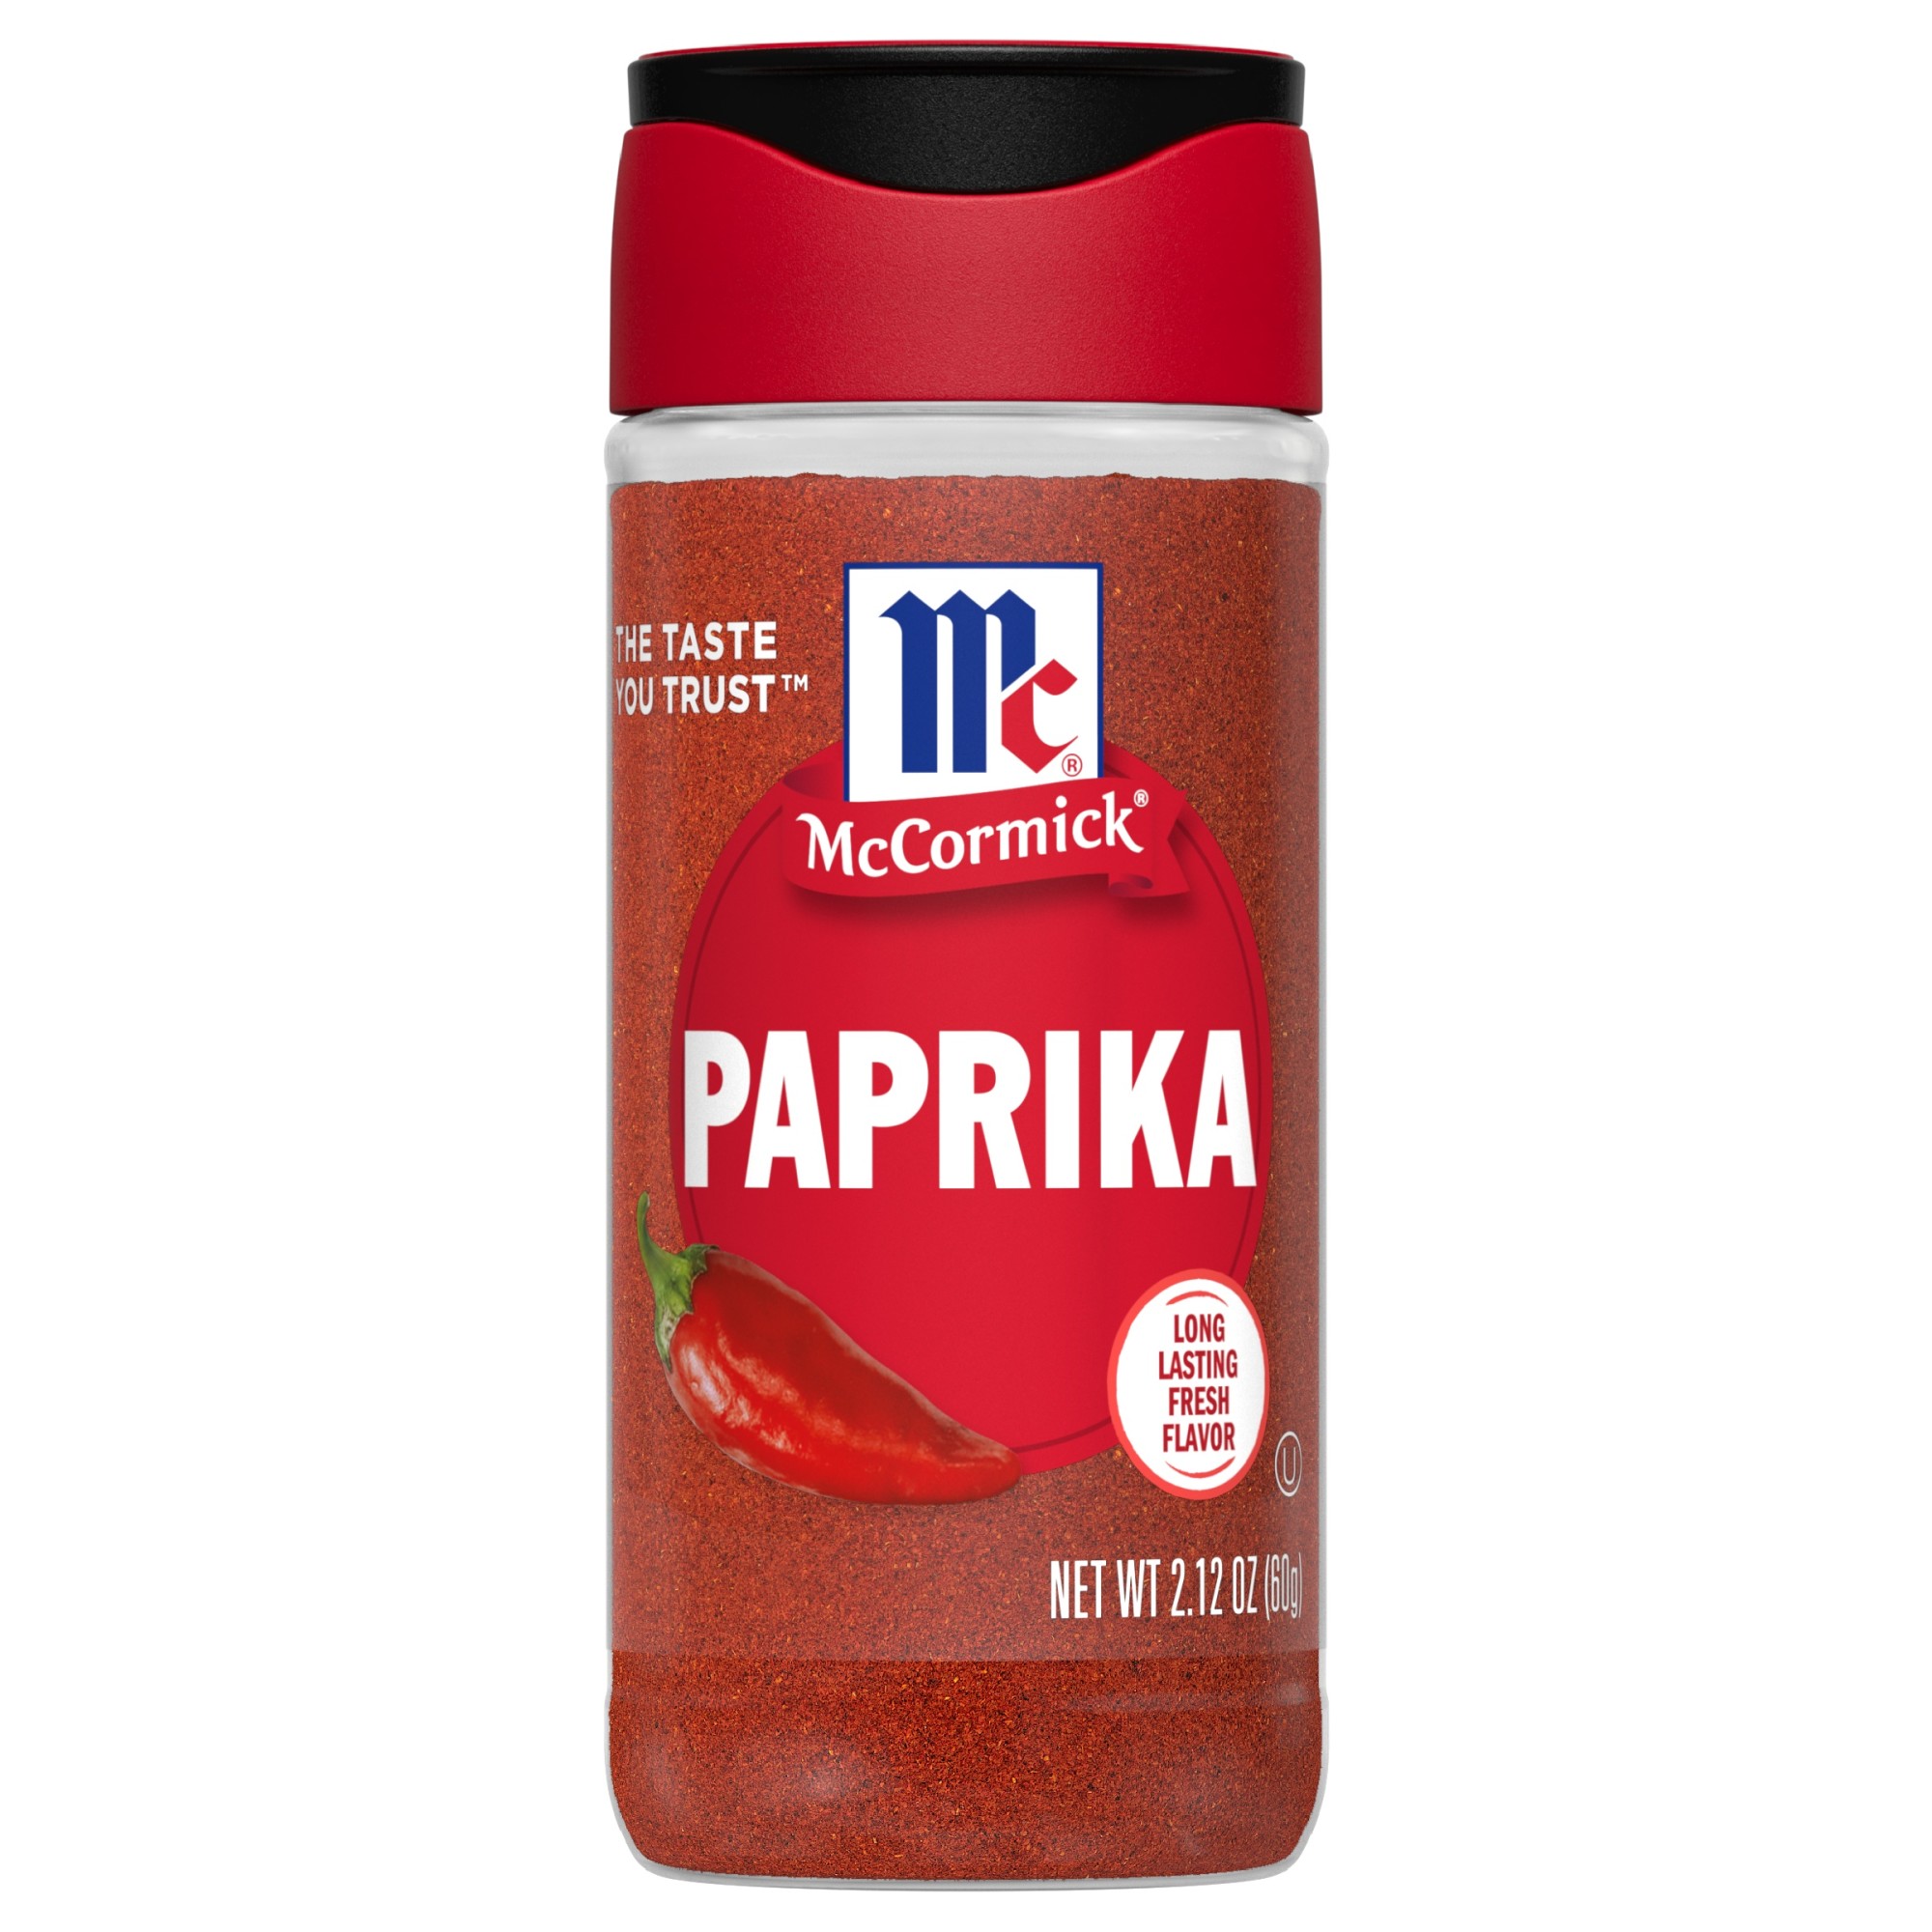 McCormick Paprika, 2.12 oz Mixed Spices & Seasonings - image 1 of 13